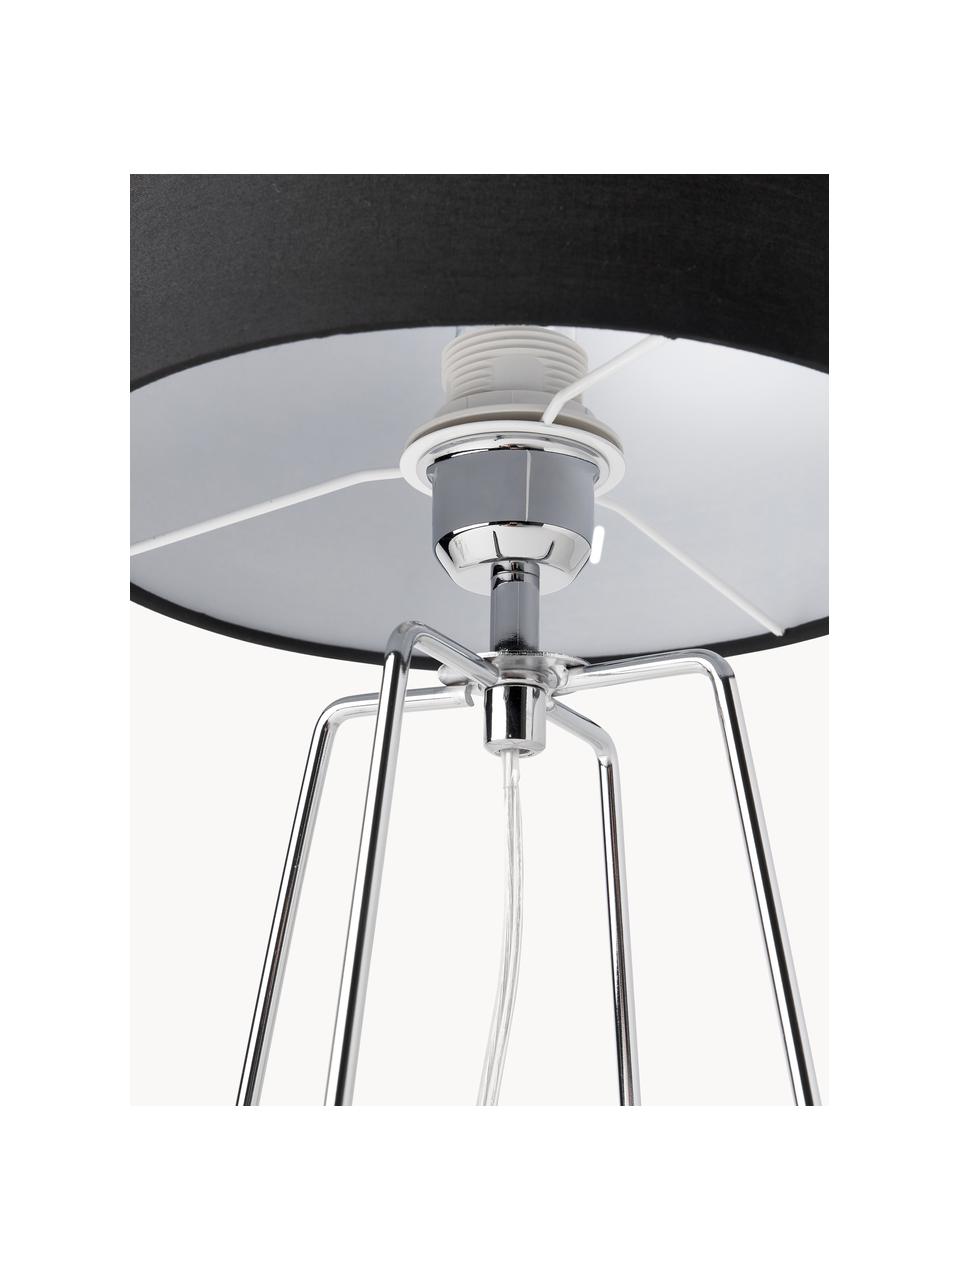 Lámpara de mesa Karolina, Pantalla: tela, Cable: plástico, Negro, cromo, Ø 25 x Al 49 cm